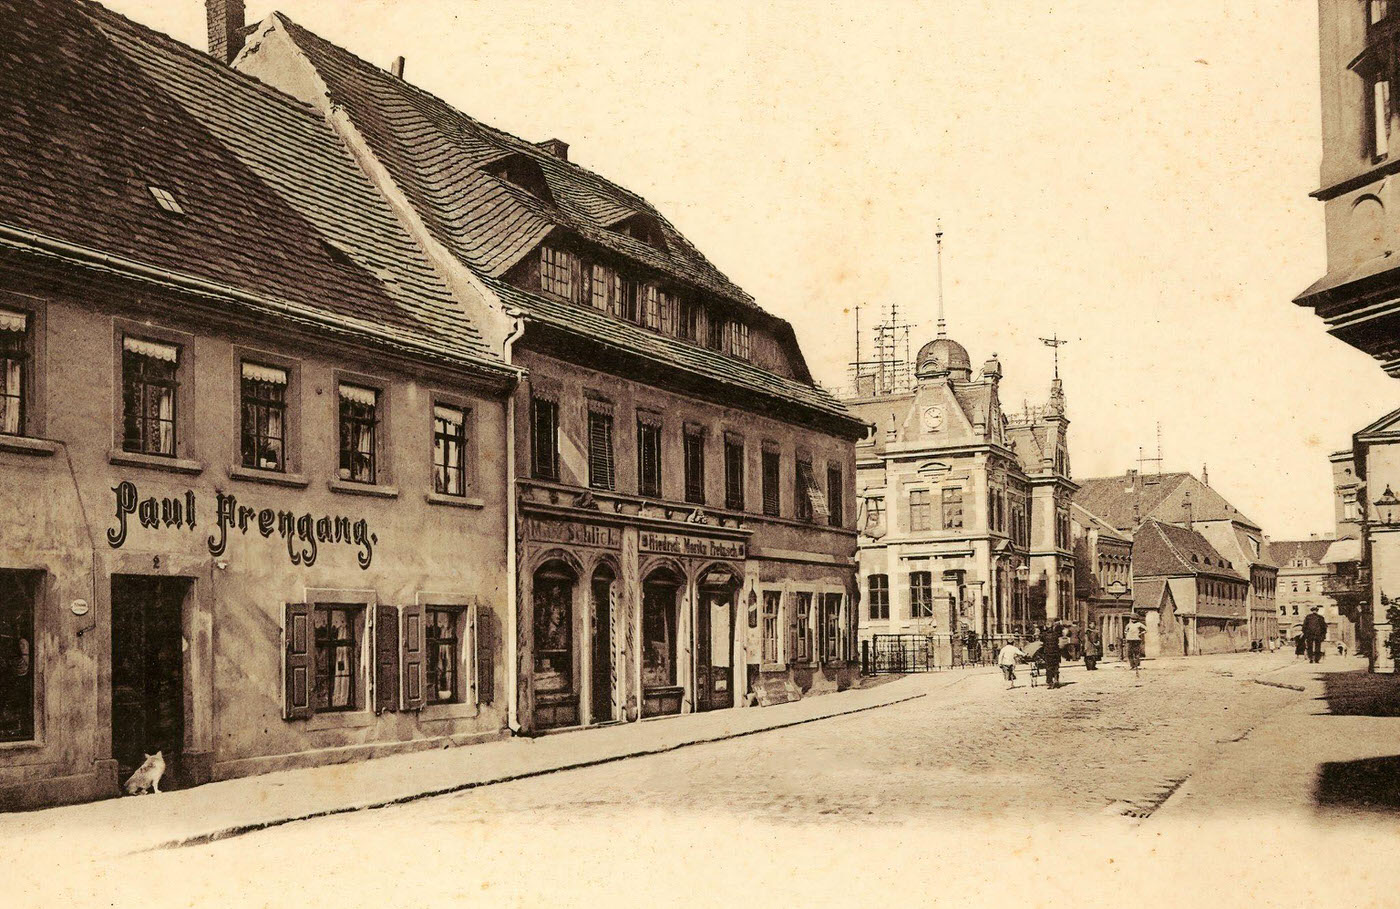 Buildings in Borna, Post offices in Landkreis Leipzig, Landkreis Leipzig, Borna, Reichspost und Altenburgerstrasse, Germany, 1901.